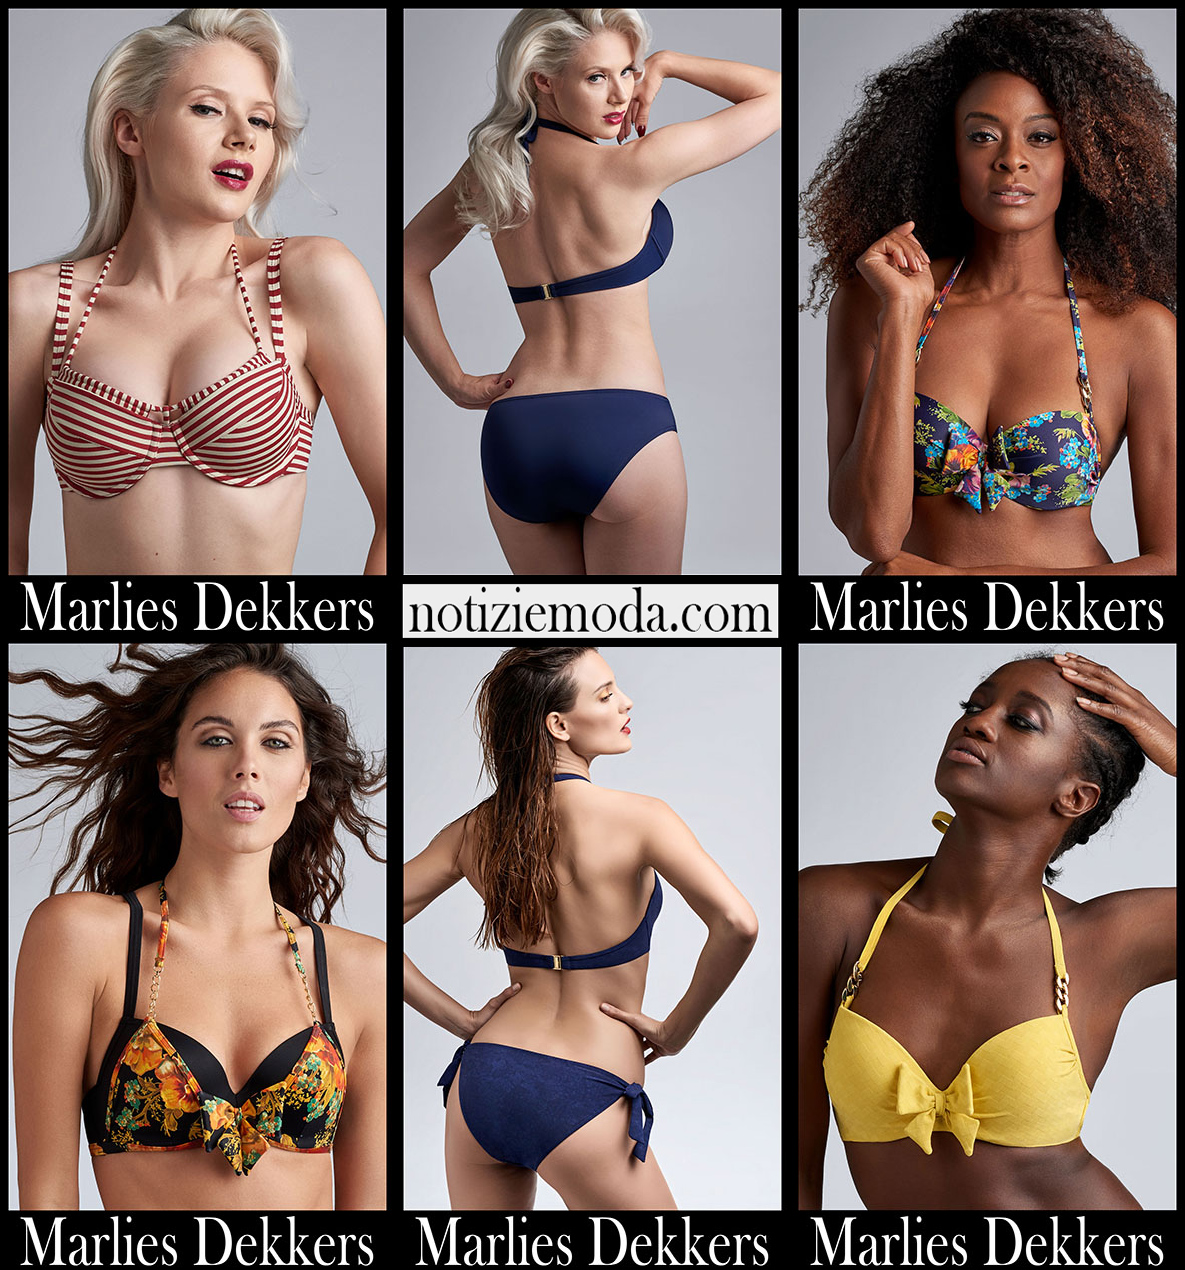 Bikini Marlies Dekkers 2020 costumi da bagno accessori